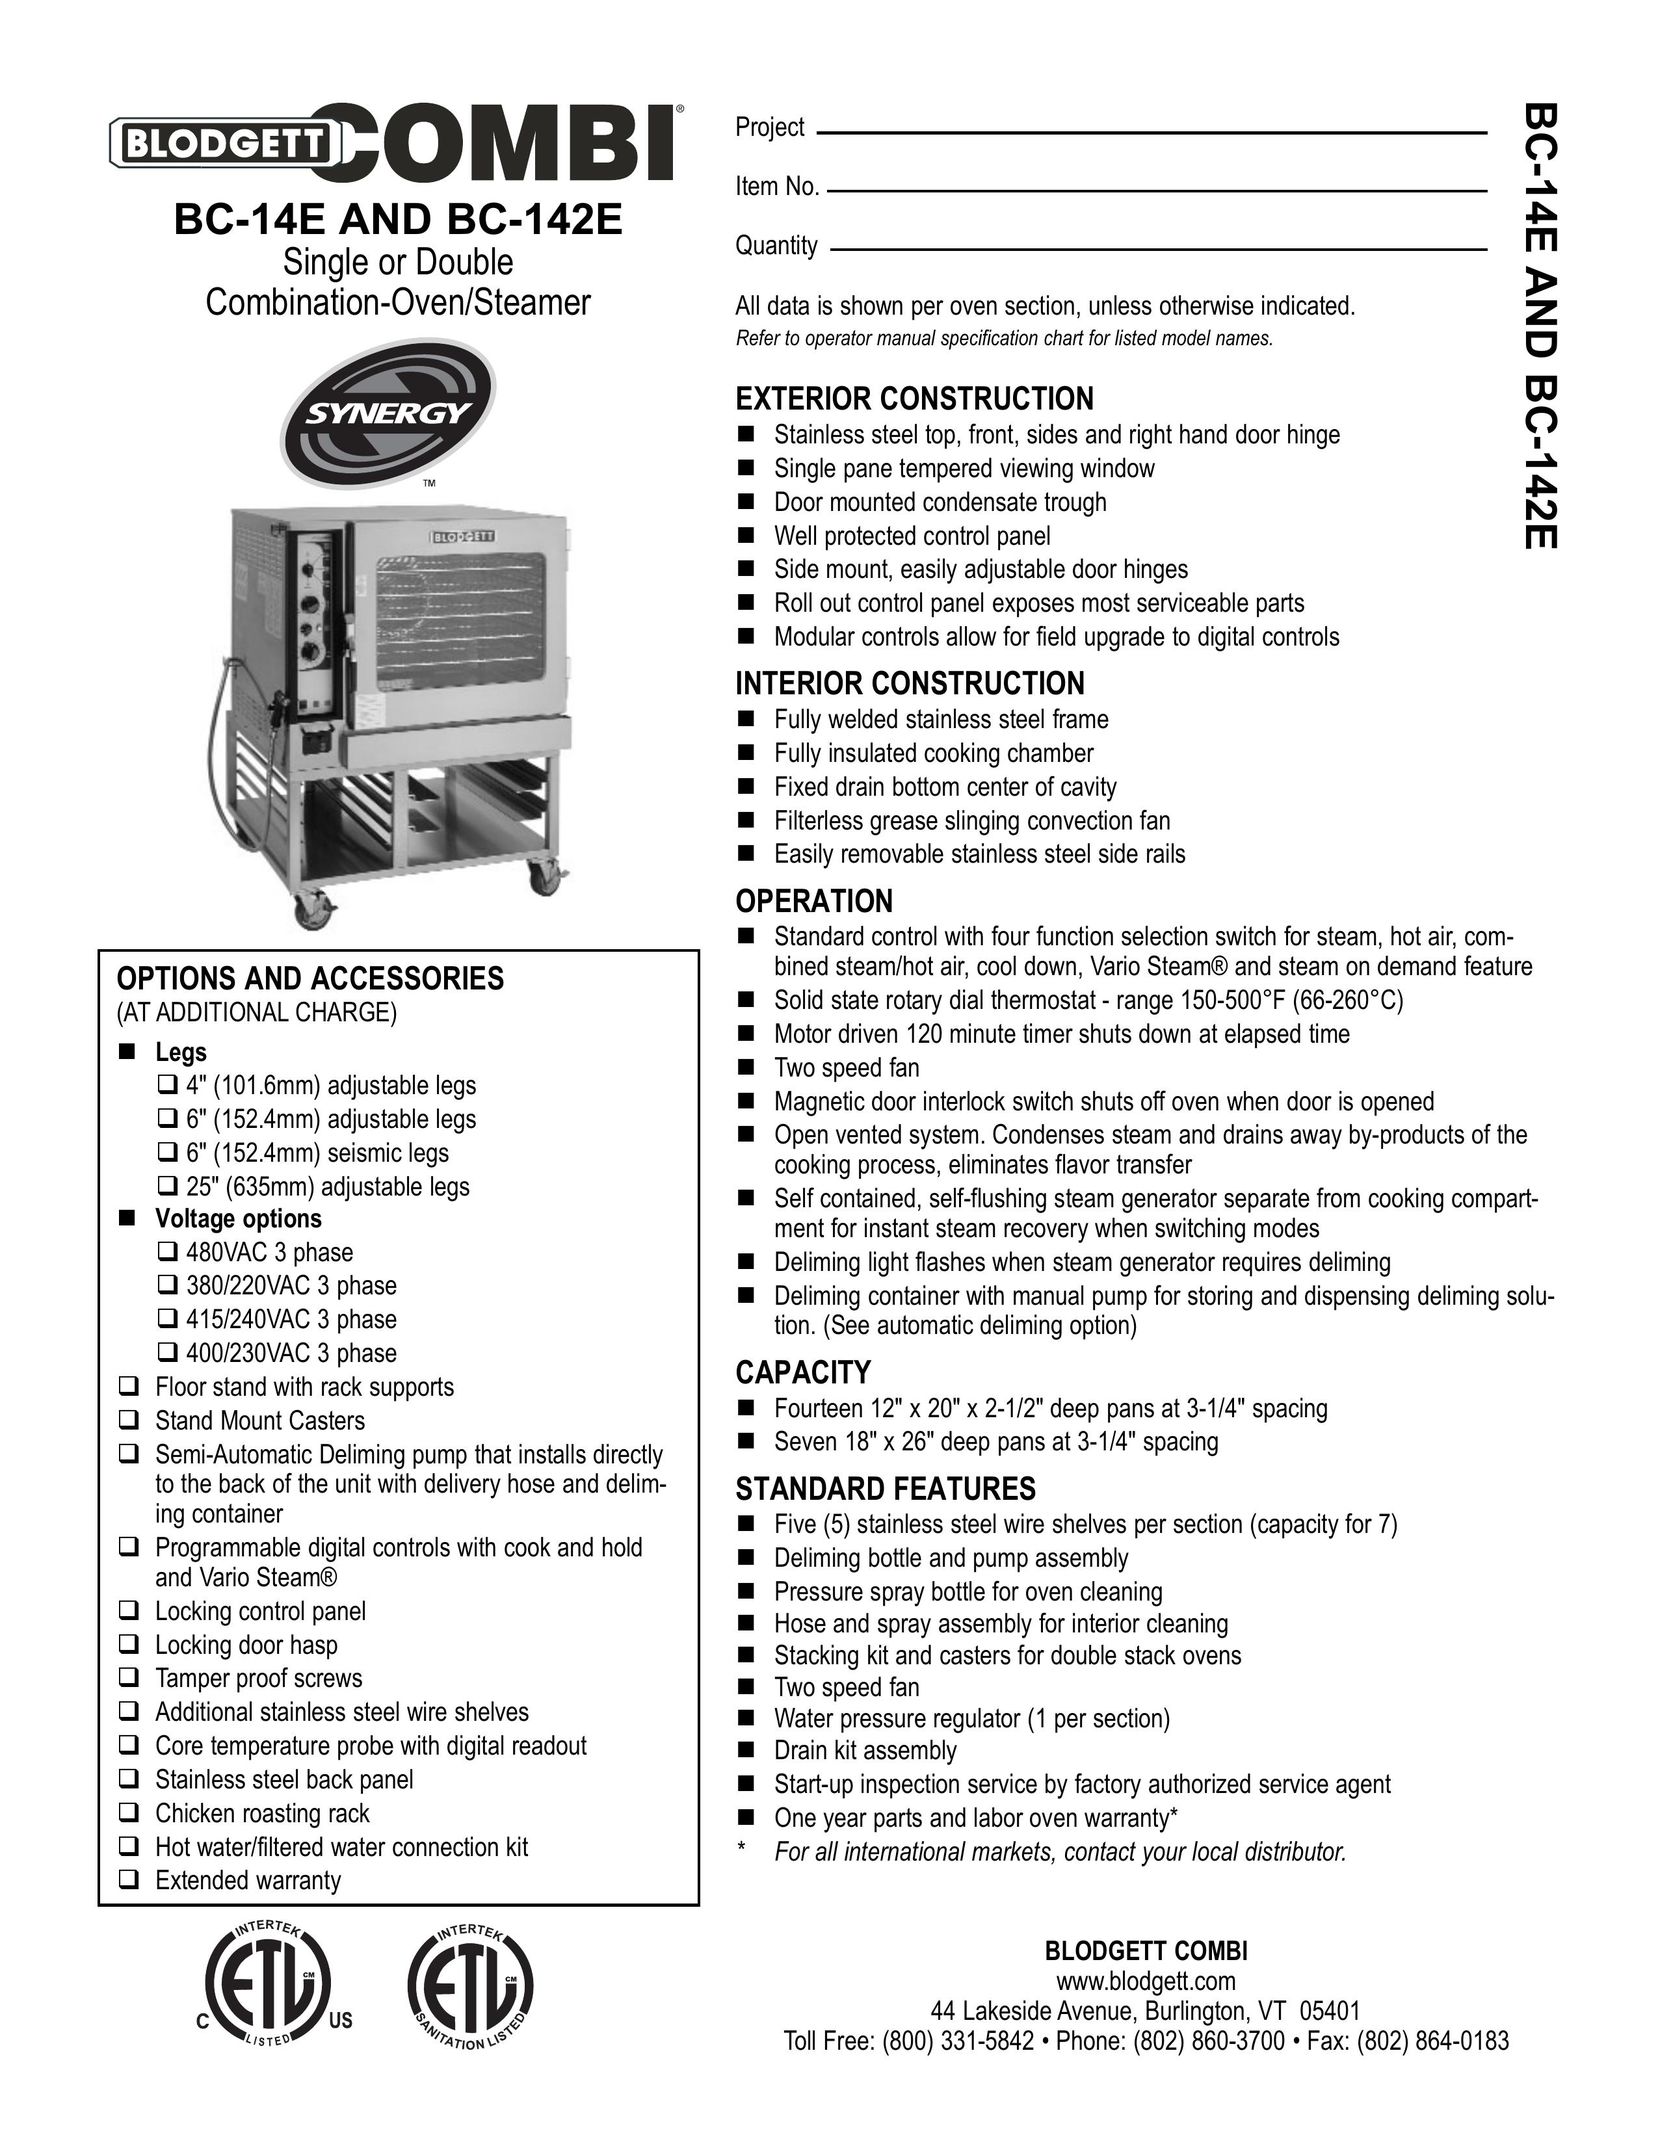 Blodgett BC-142E Microwave Oven User Manual